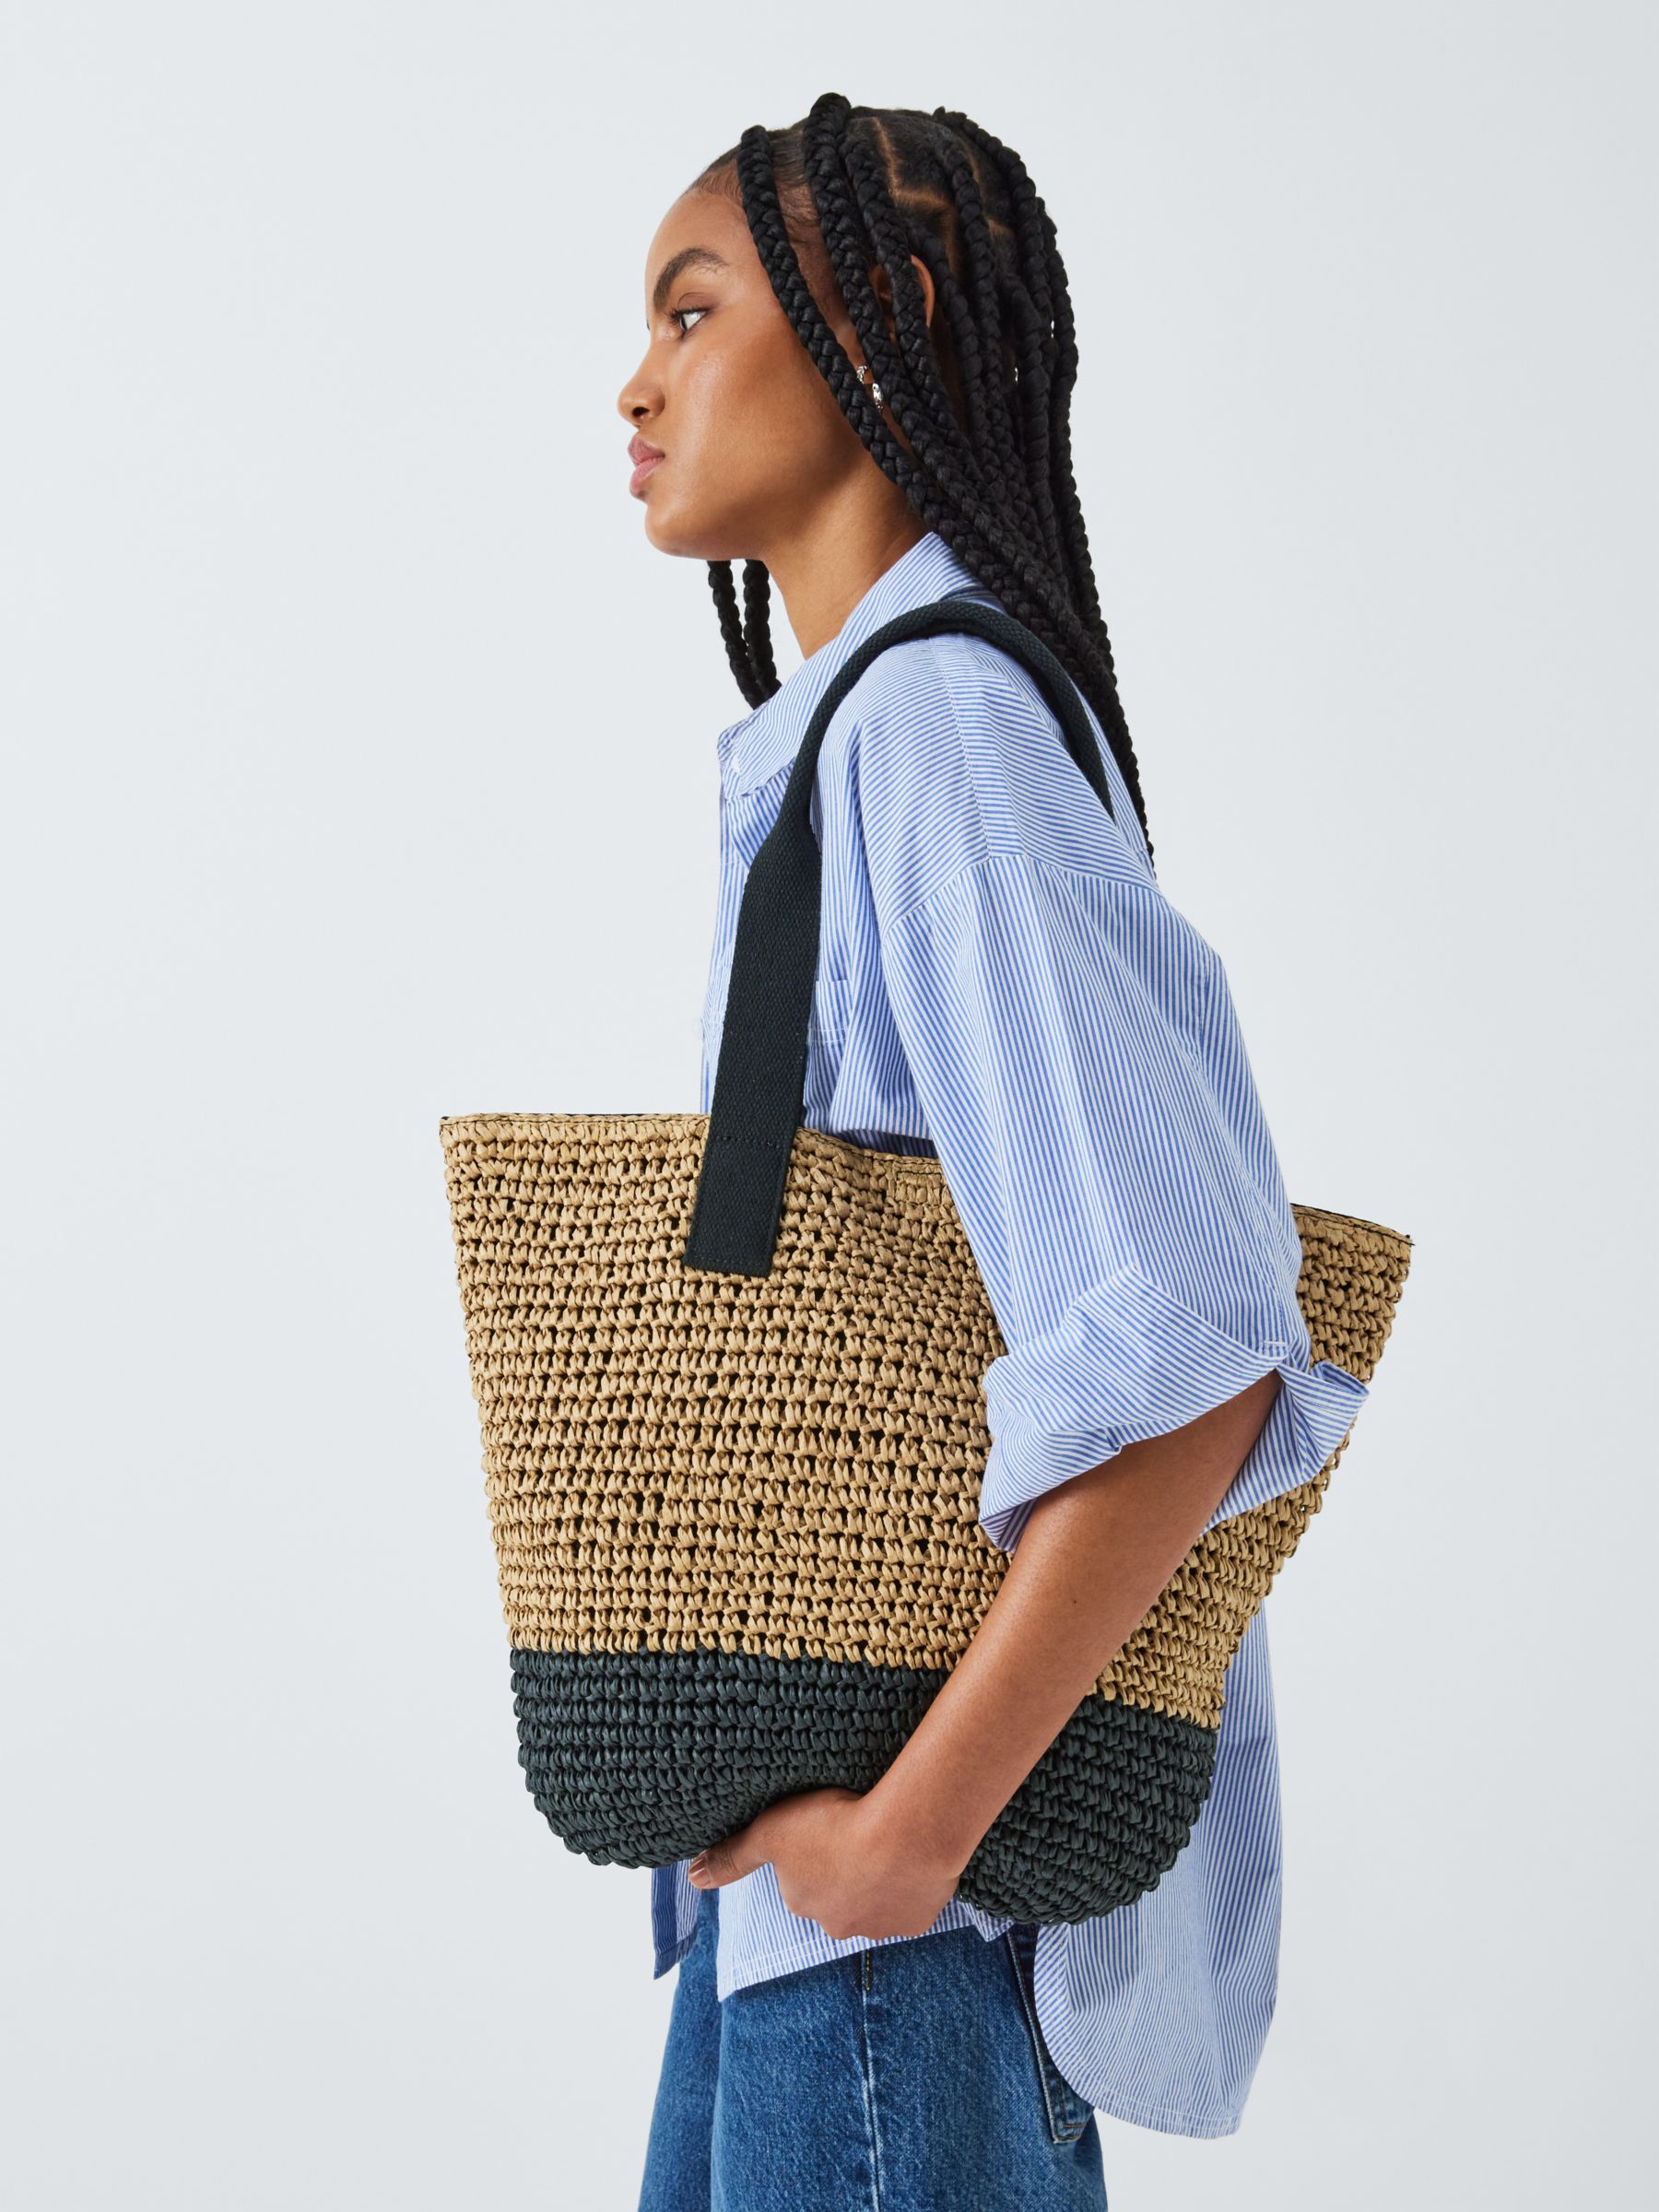 John Lewis ANYDAY Raffia Tote Bag, Natural/Black at John Lewis & Partners